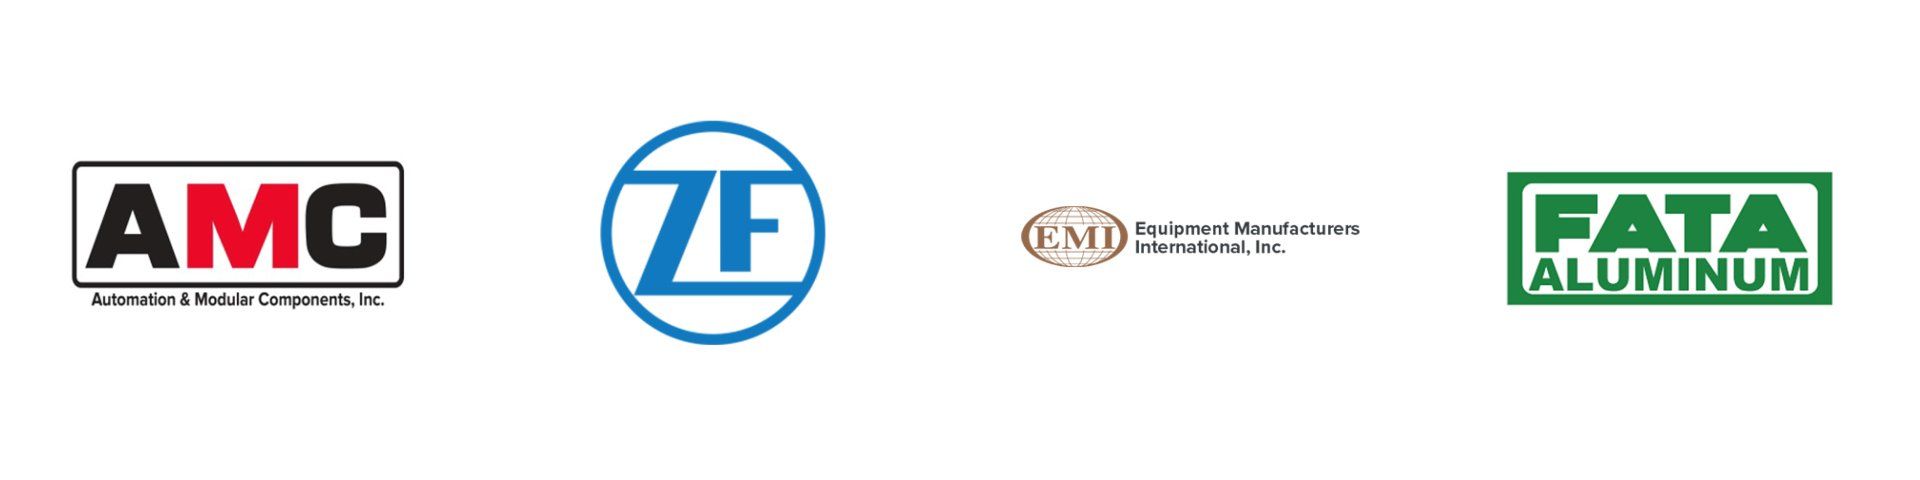 AMC, ZF, EMI and Fata Aluminum Logos